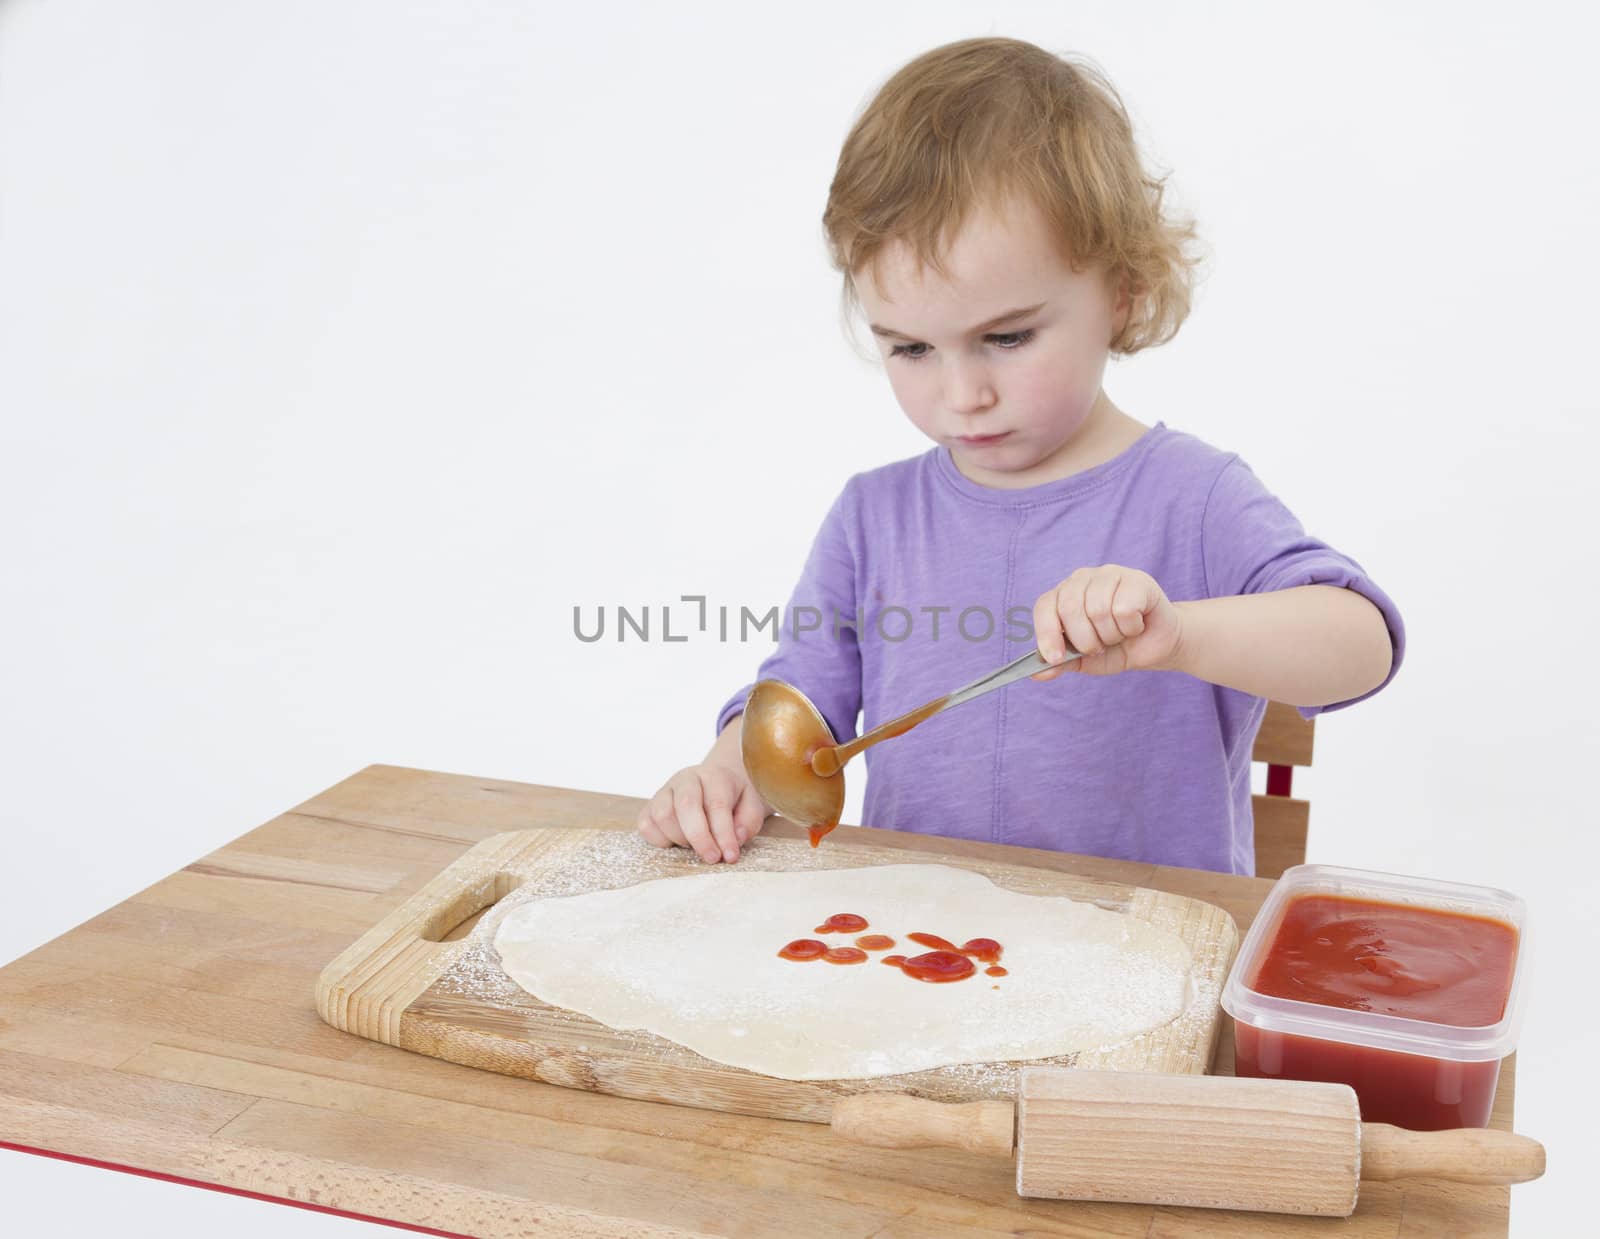 girl making pizza by gewoldi